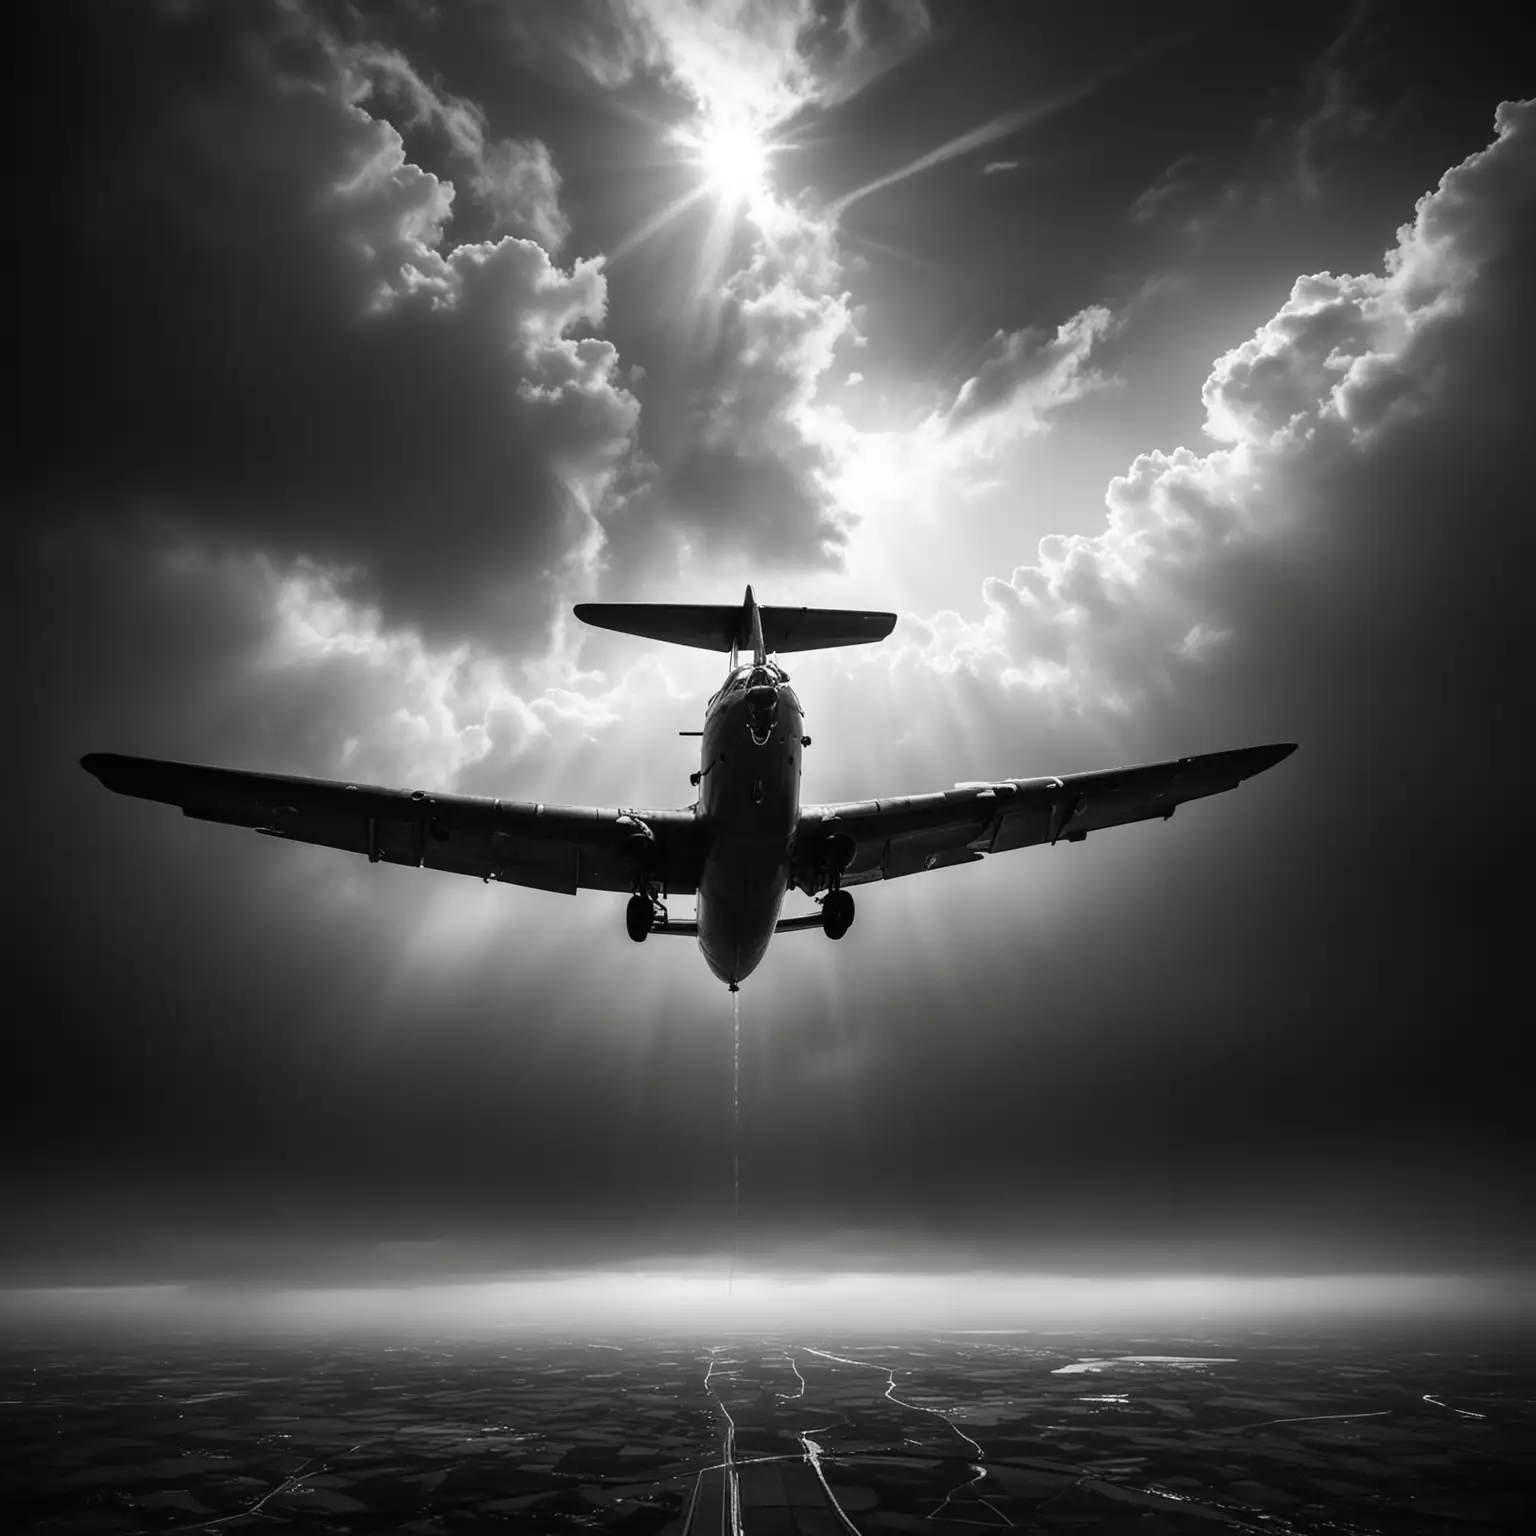 black and white moody photograph of something representing adventure, flight, art, cinematic, imaginative. Award winning photography